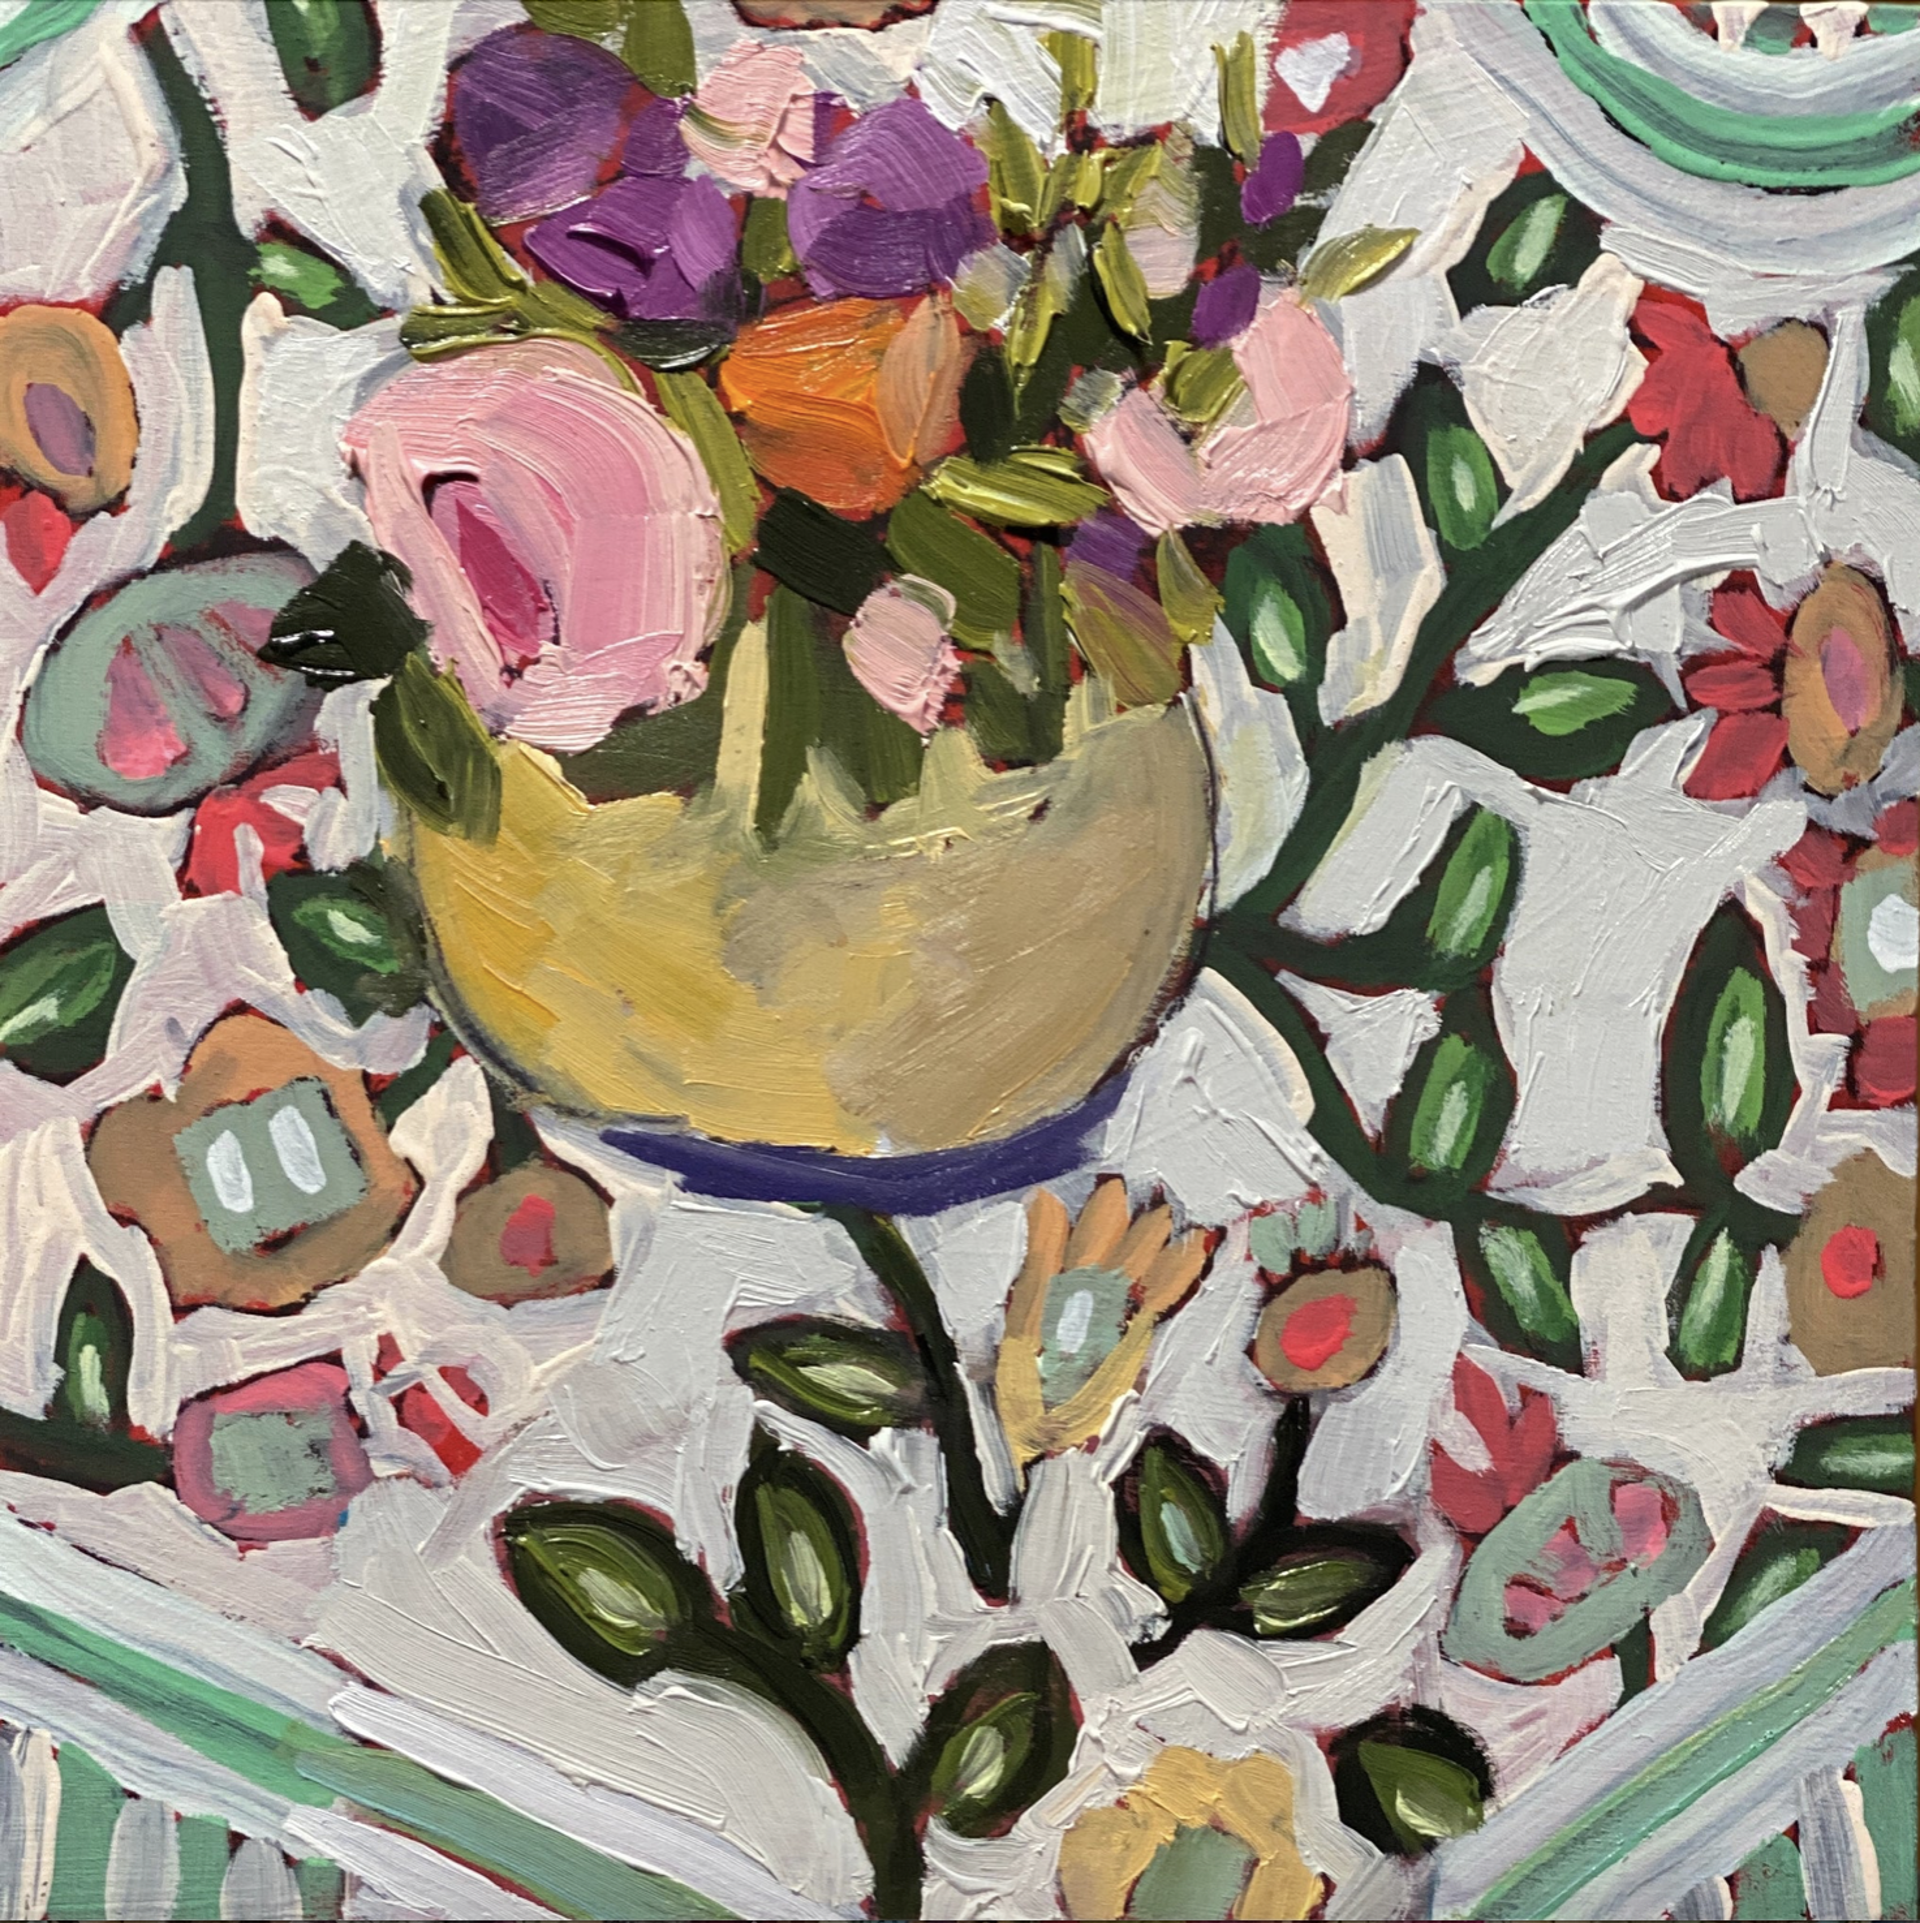 Find the Flowers by Debbie Miller